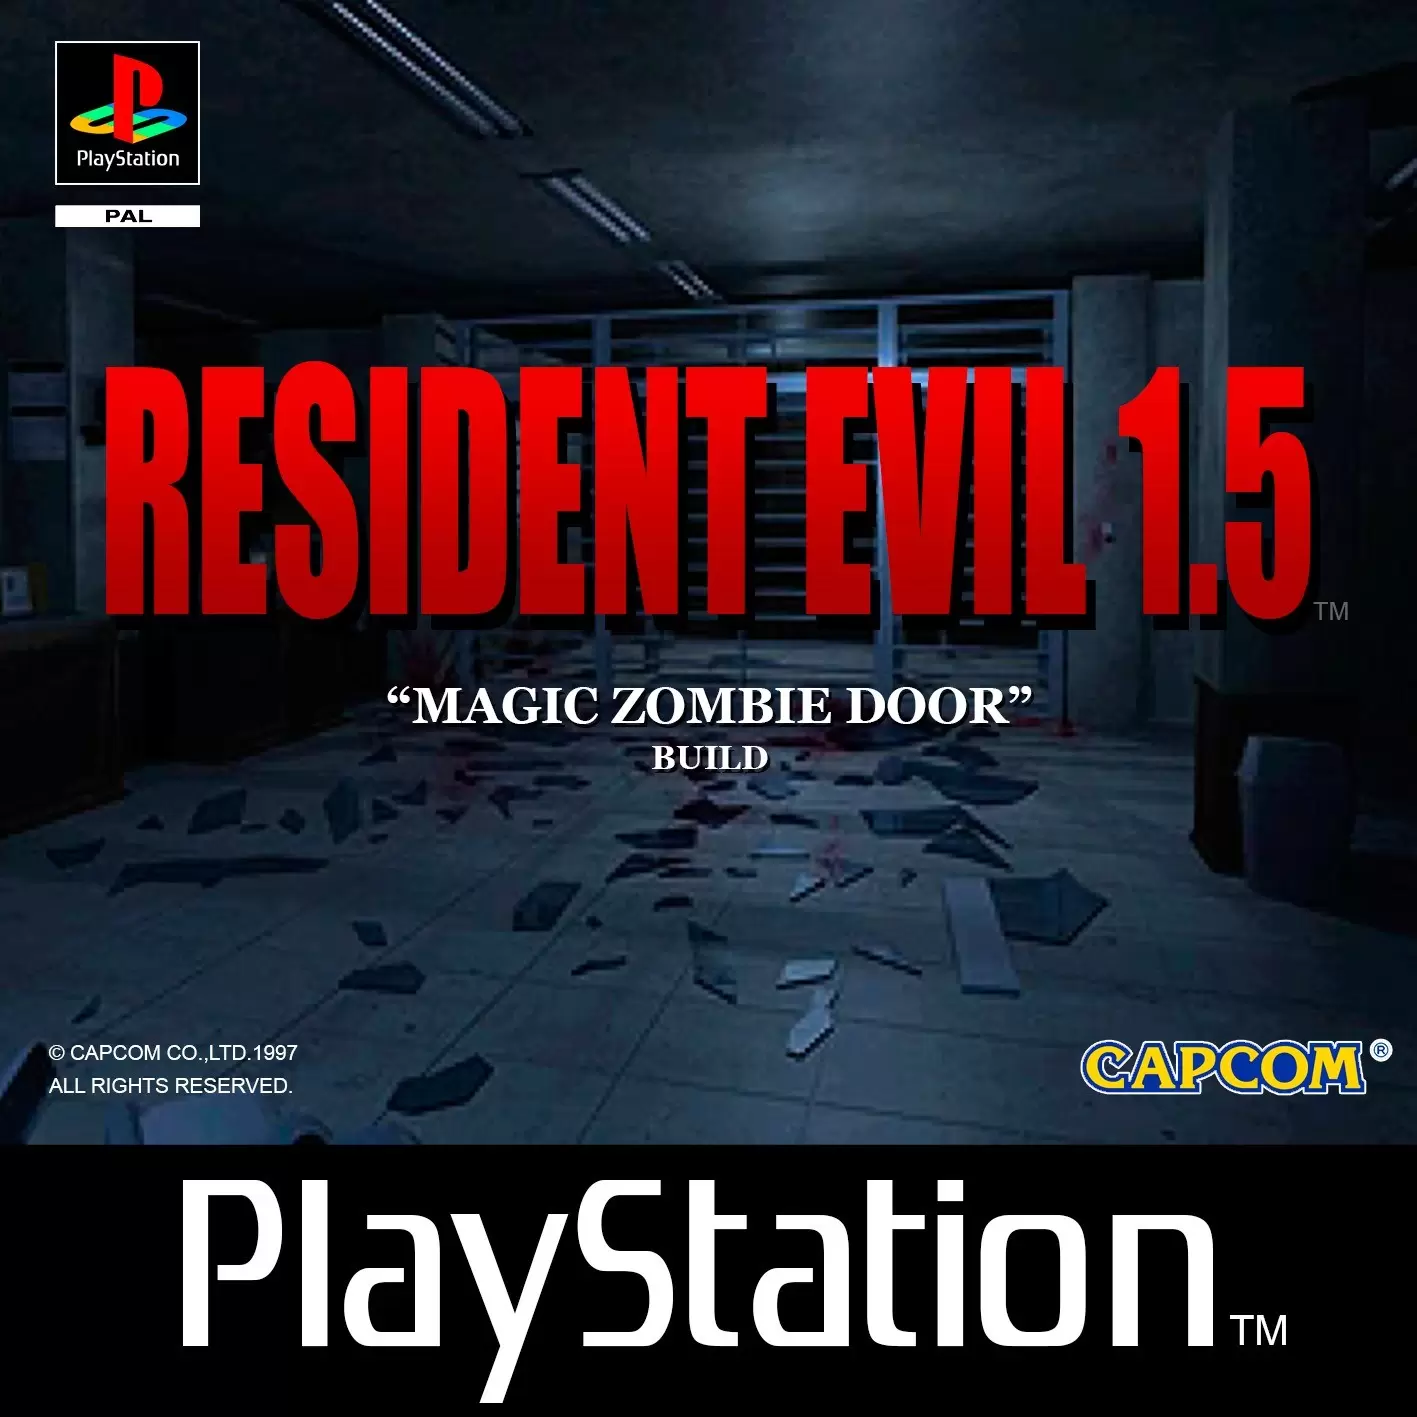 Playstation games - Resident Evil 1.5